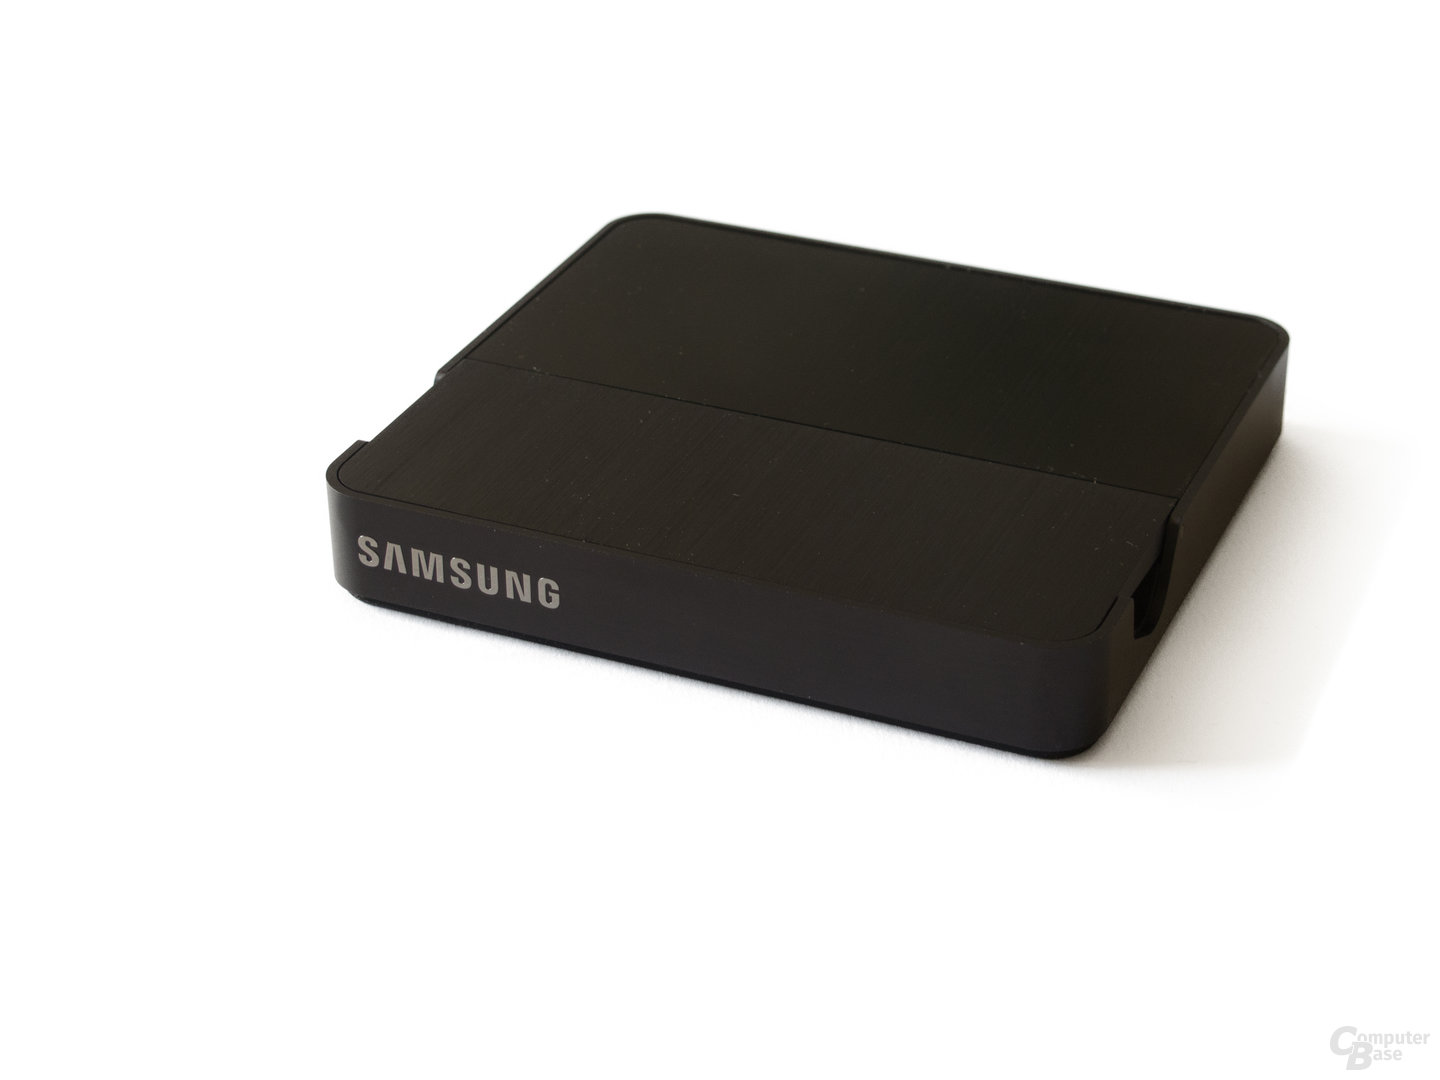 Samsung Serie 7 Slate: Dockingstation